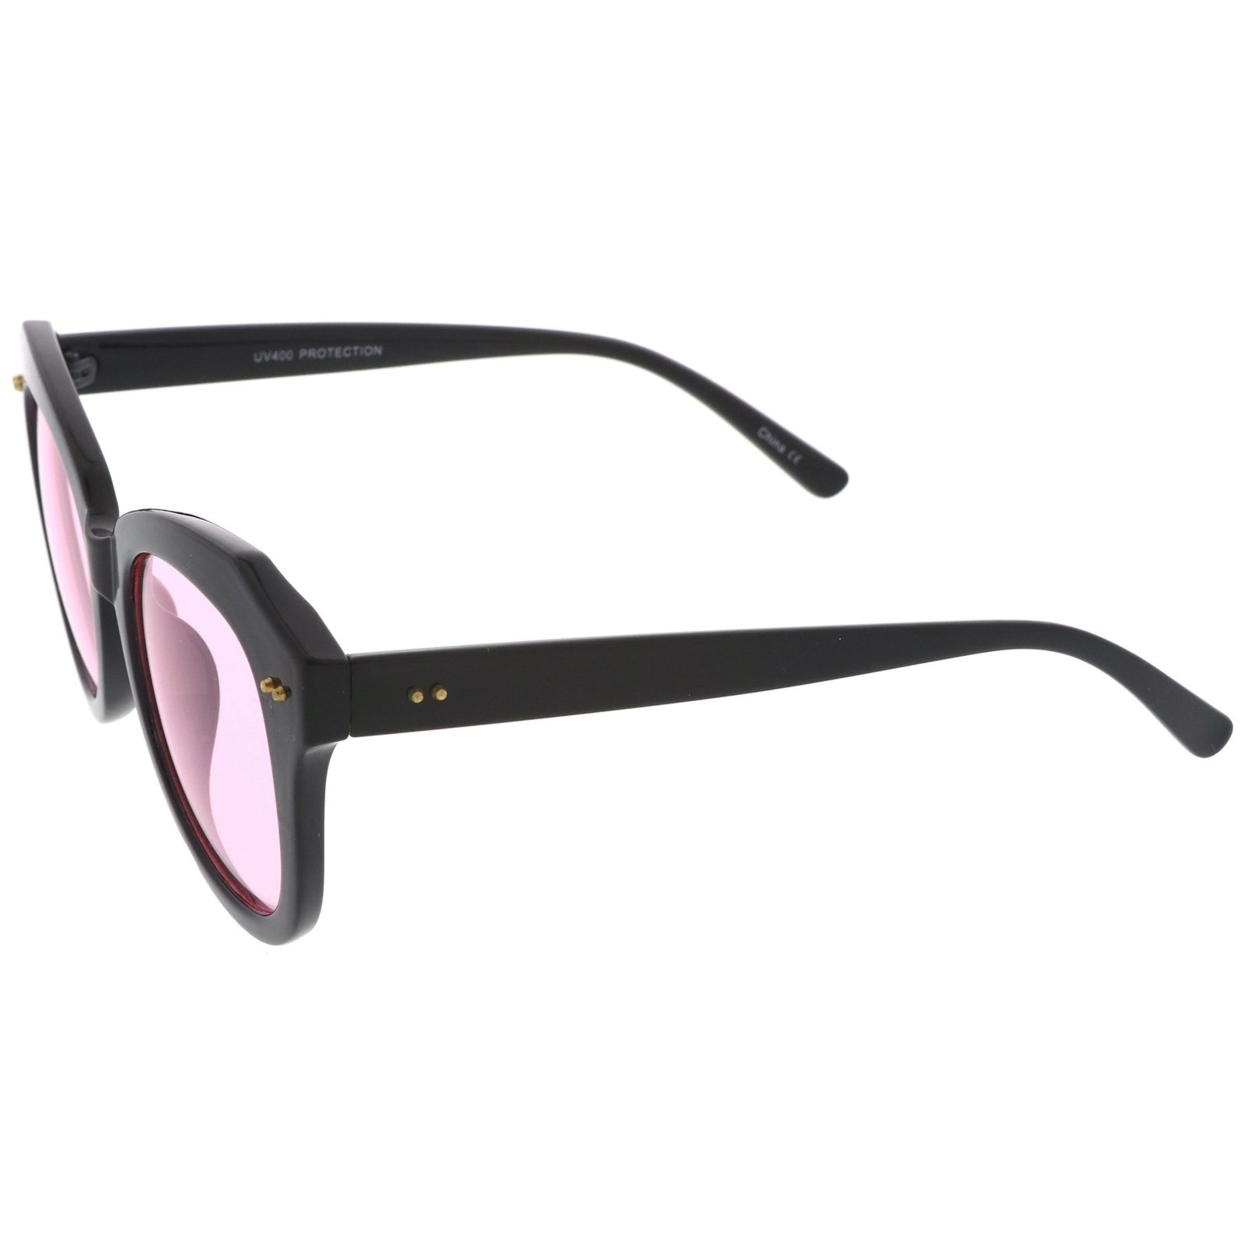 Women's Oversize Horn Rimmed Colored Round Lens Cat Eye Sunglasses 52mm - Black / Yellow